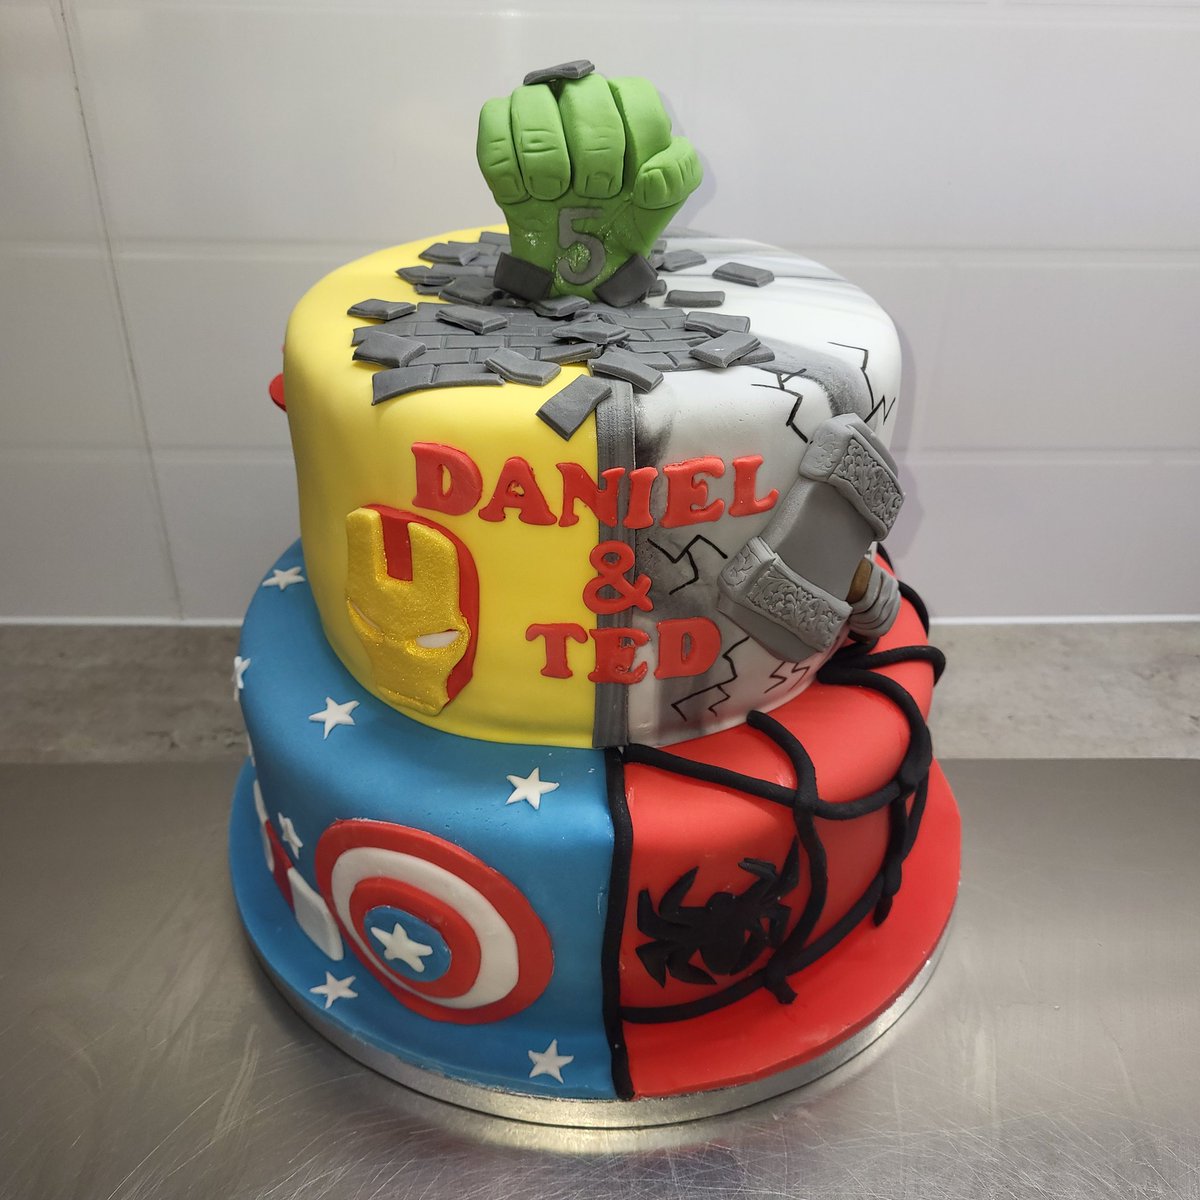 Loved making this Marvel Cake 
#birthdaycake #marvel #marvelcake #captainamerica #spiderman #ironman #thor #hulk #avengers #victoriasponge #twotier #lovemyjob #enjoymywork #smallbusiness #supportlocal #familyrun #hyginerating #fivestar #tmcc #themobilecupcakecompany